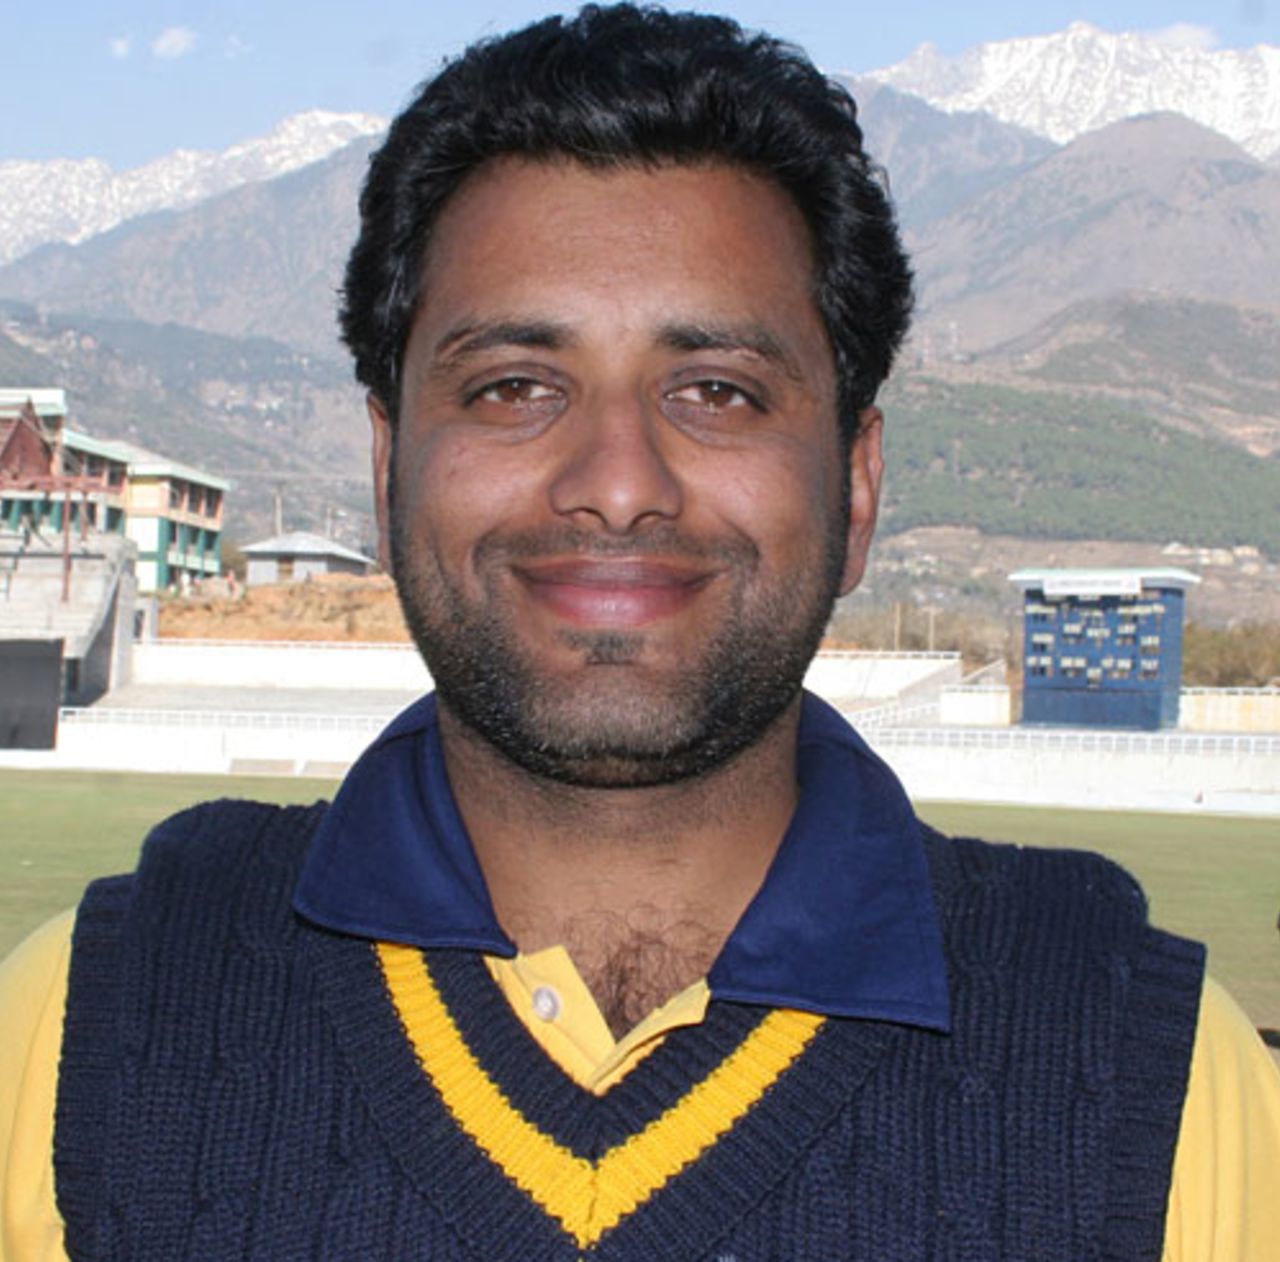 Ankur Kakkar, player portrait, February 19, 2009